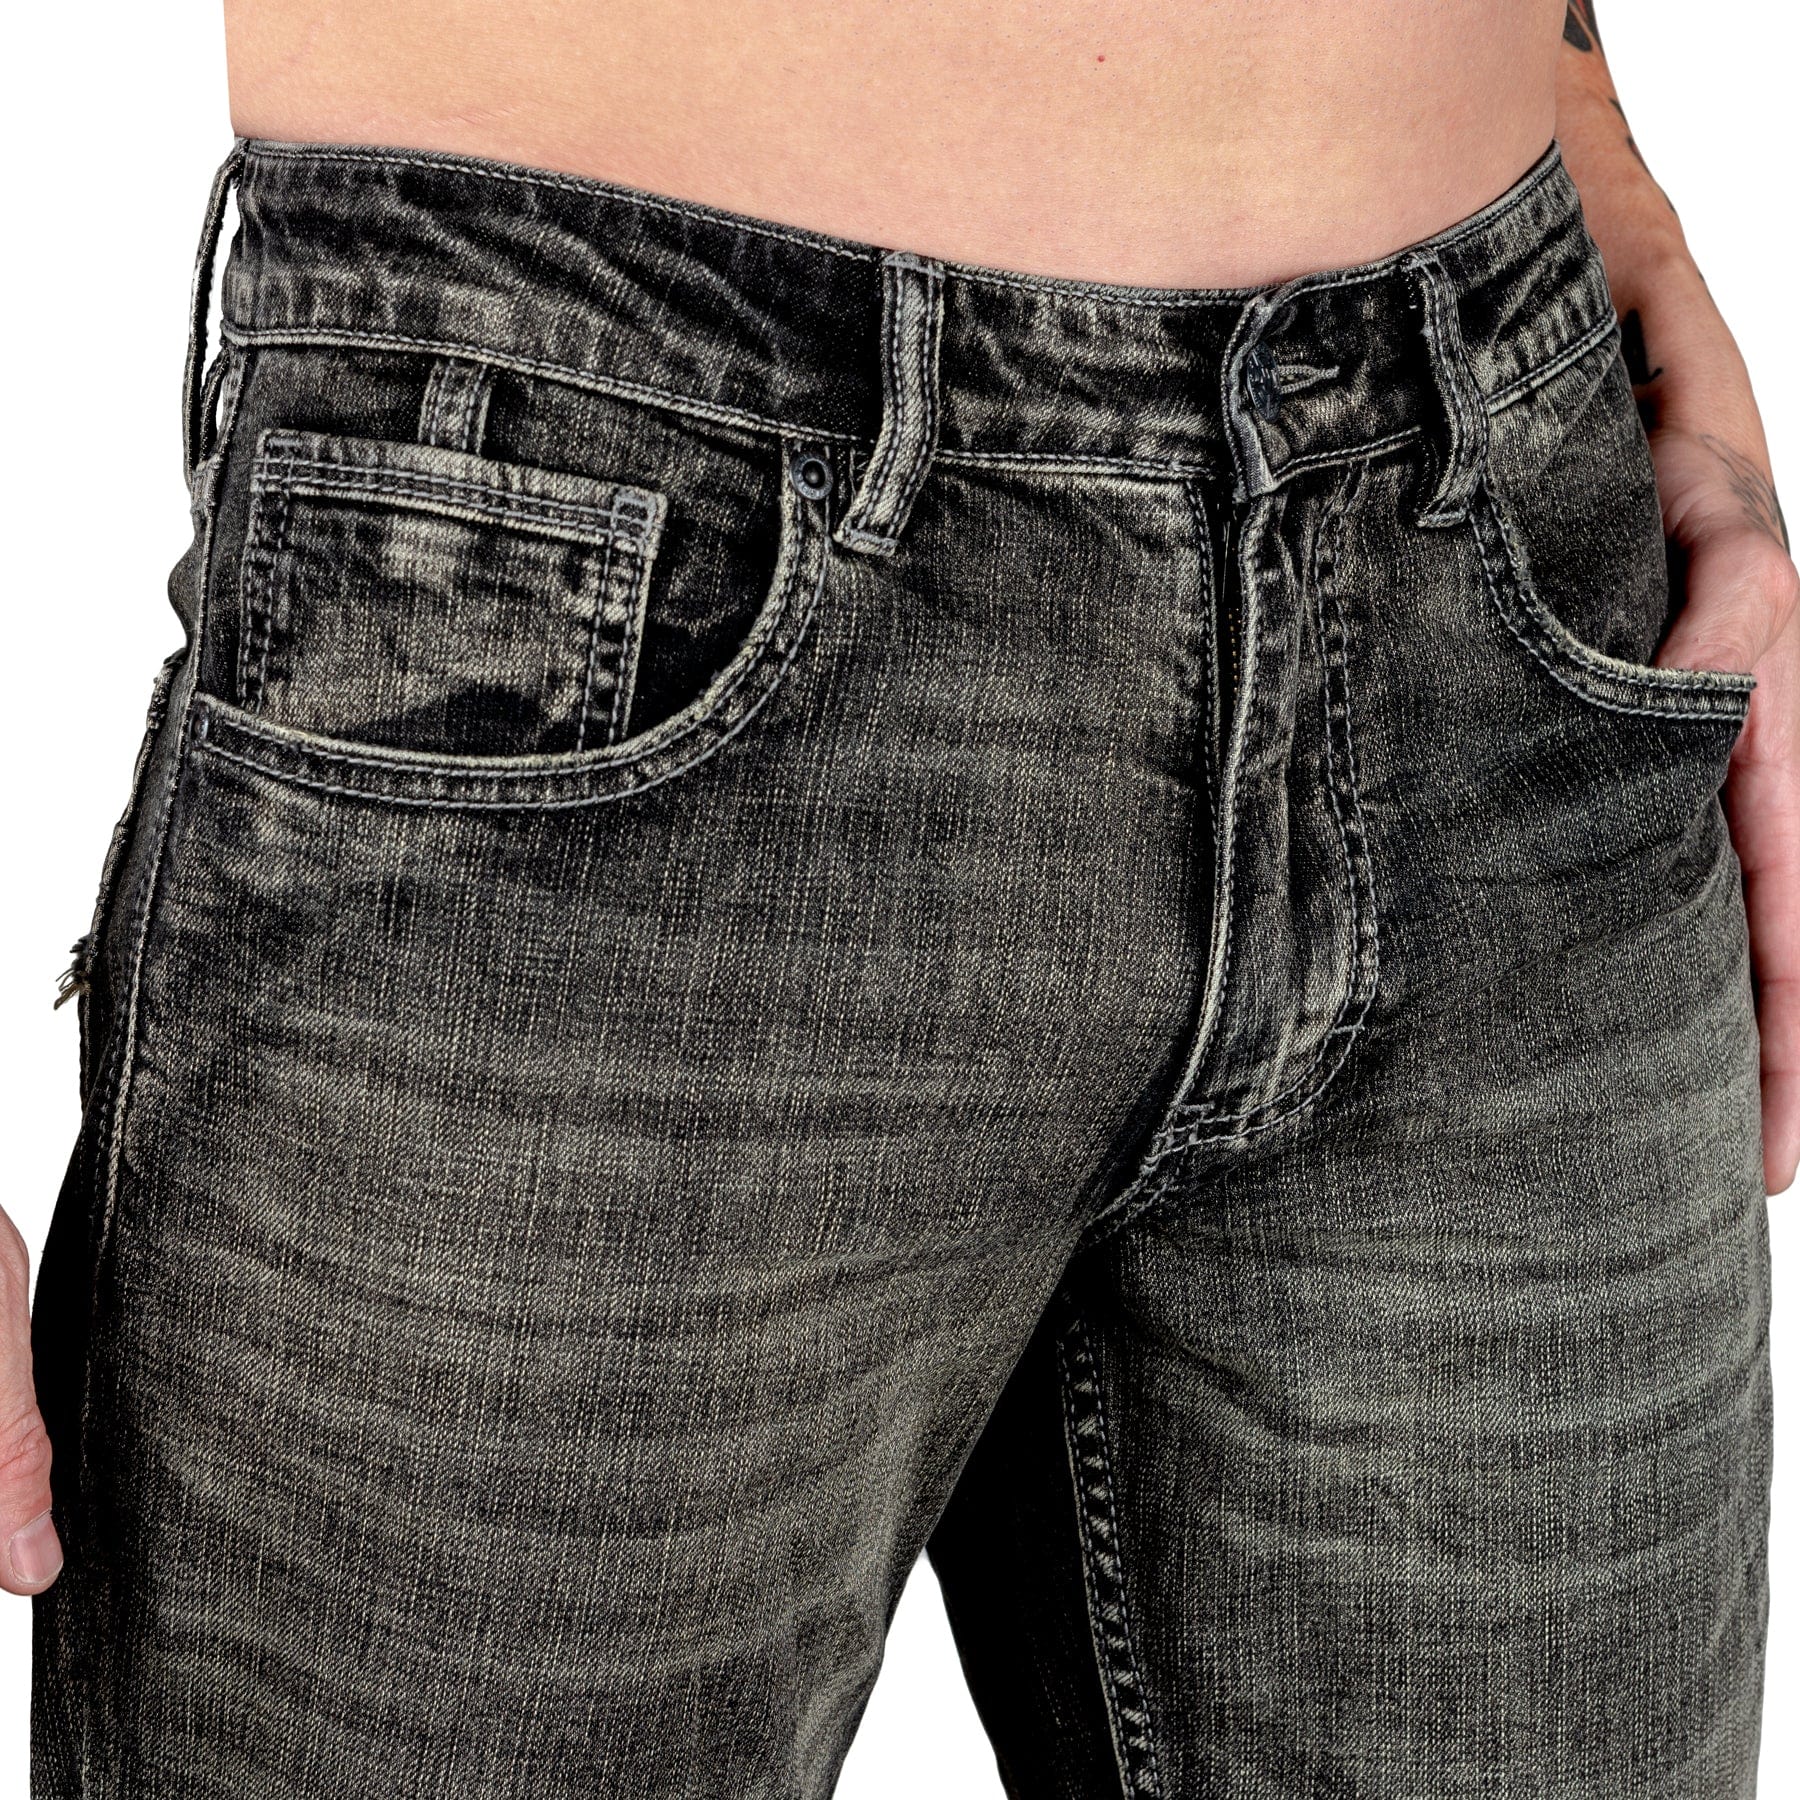 Wornstar Clothing Mens Jeans. Trailblazer Denim Pants - Vintage Black